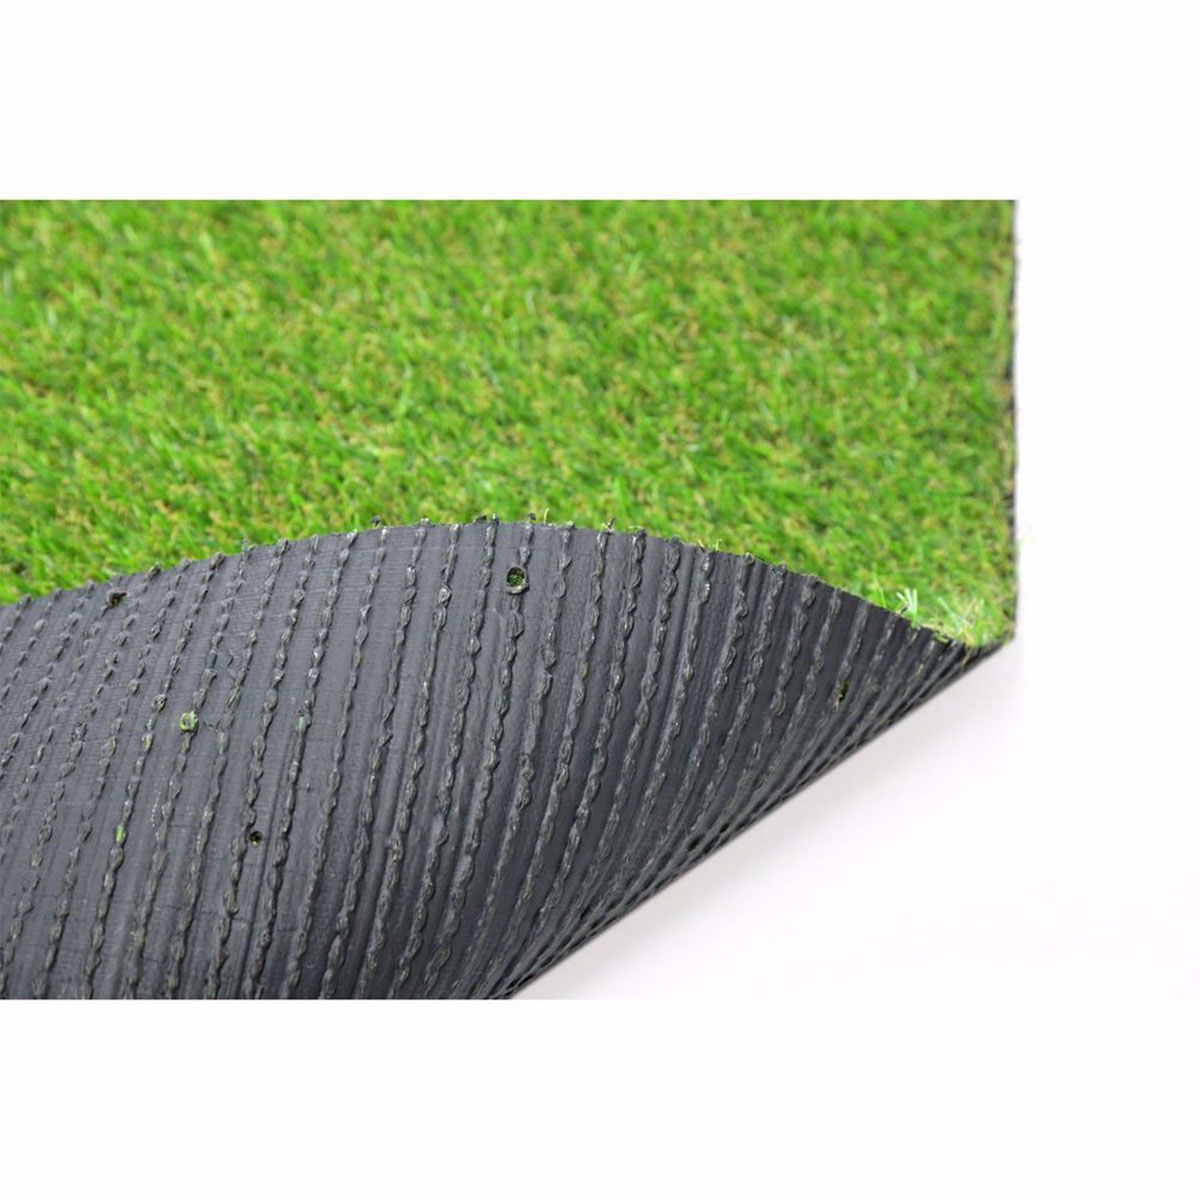 Awon Kunststoff-Rasen grün, 1x3 m